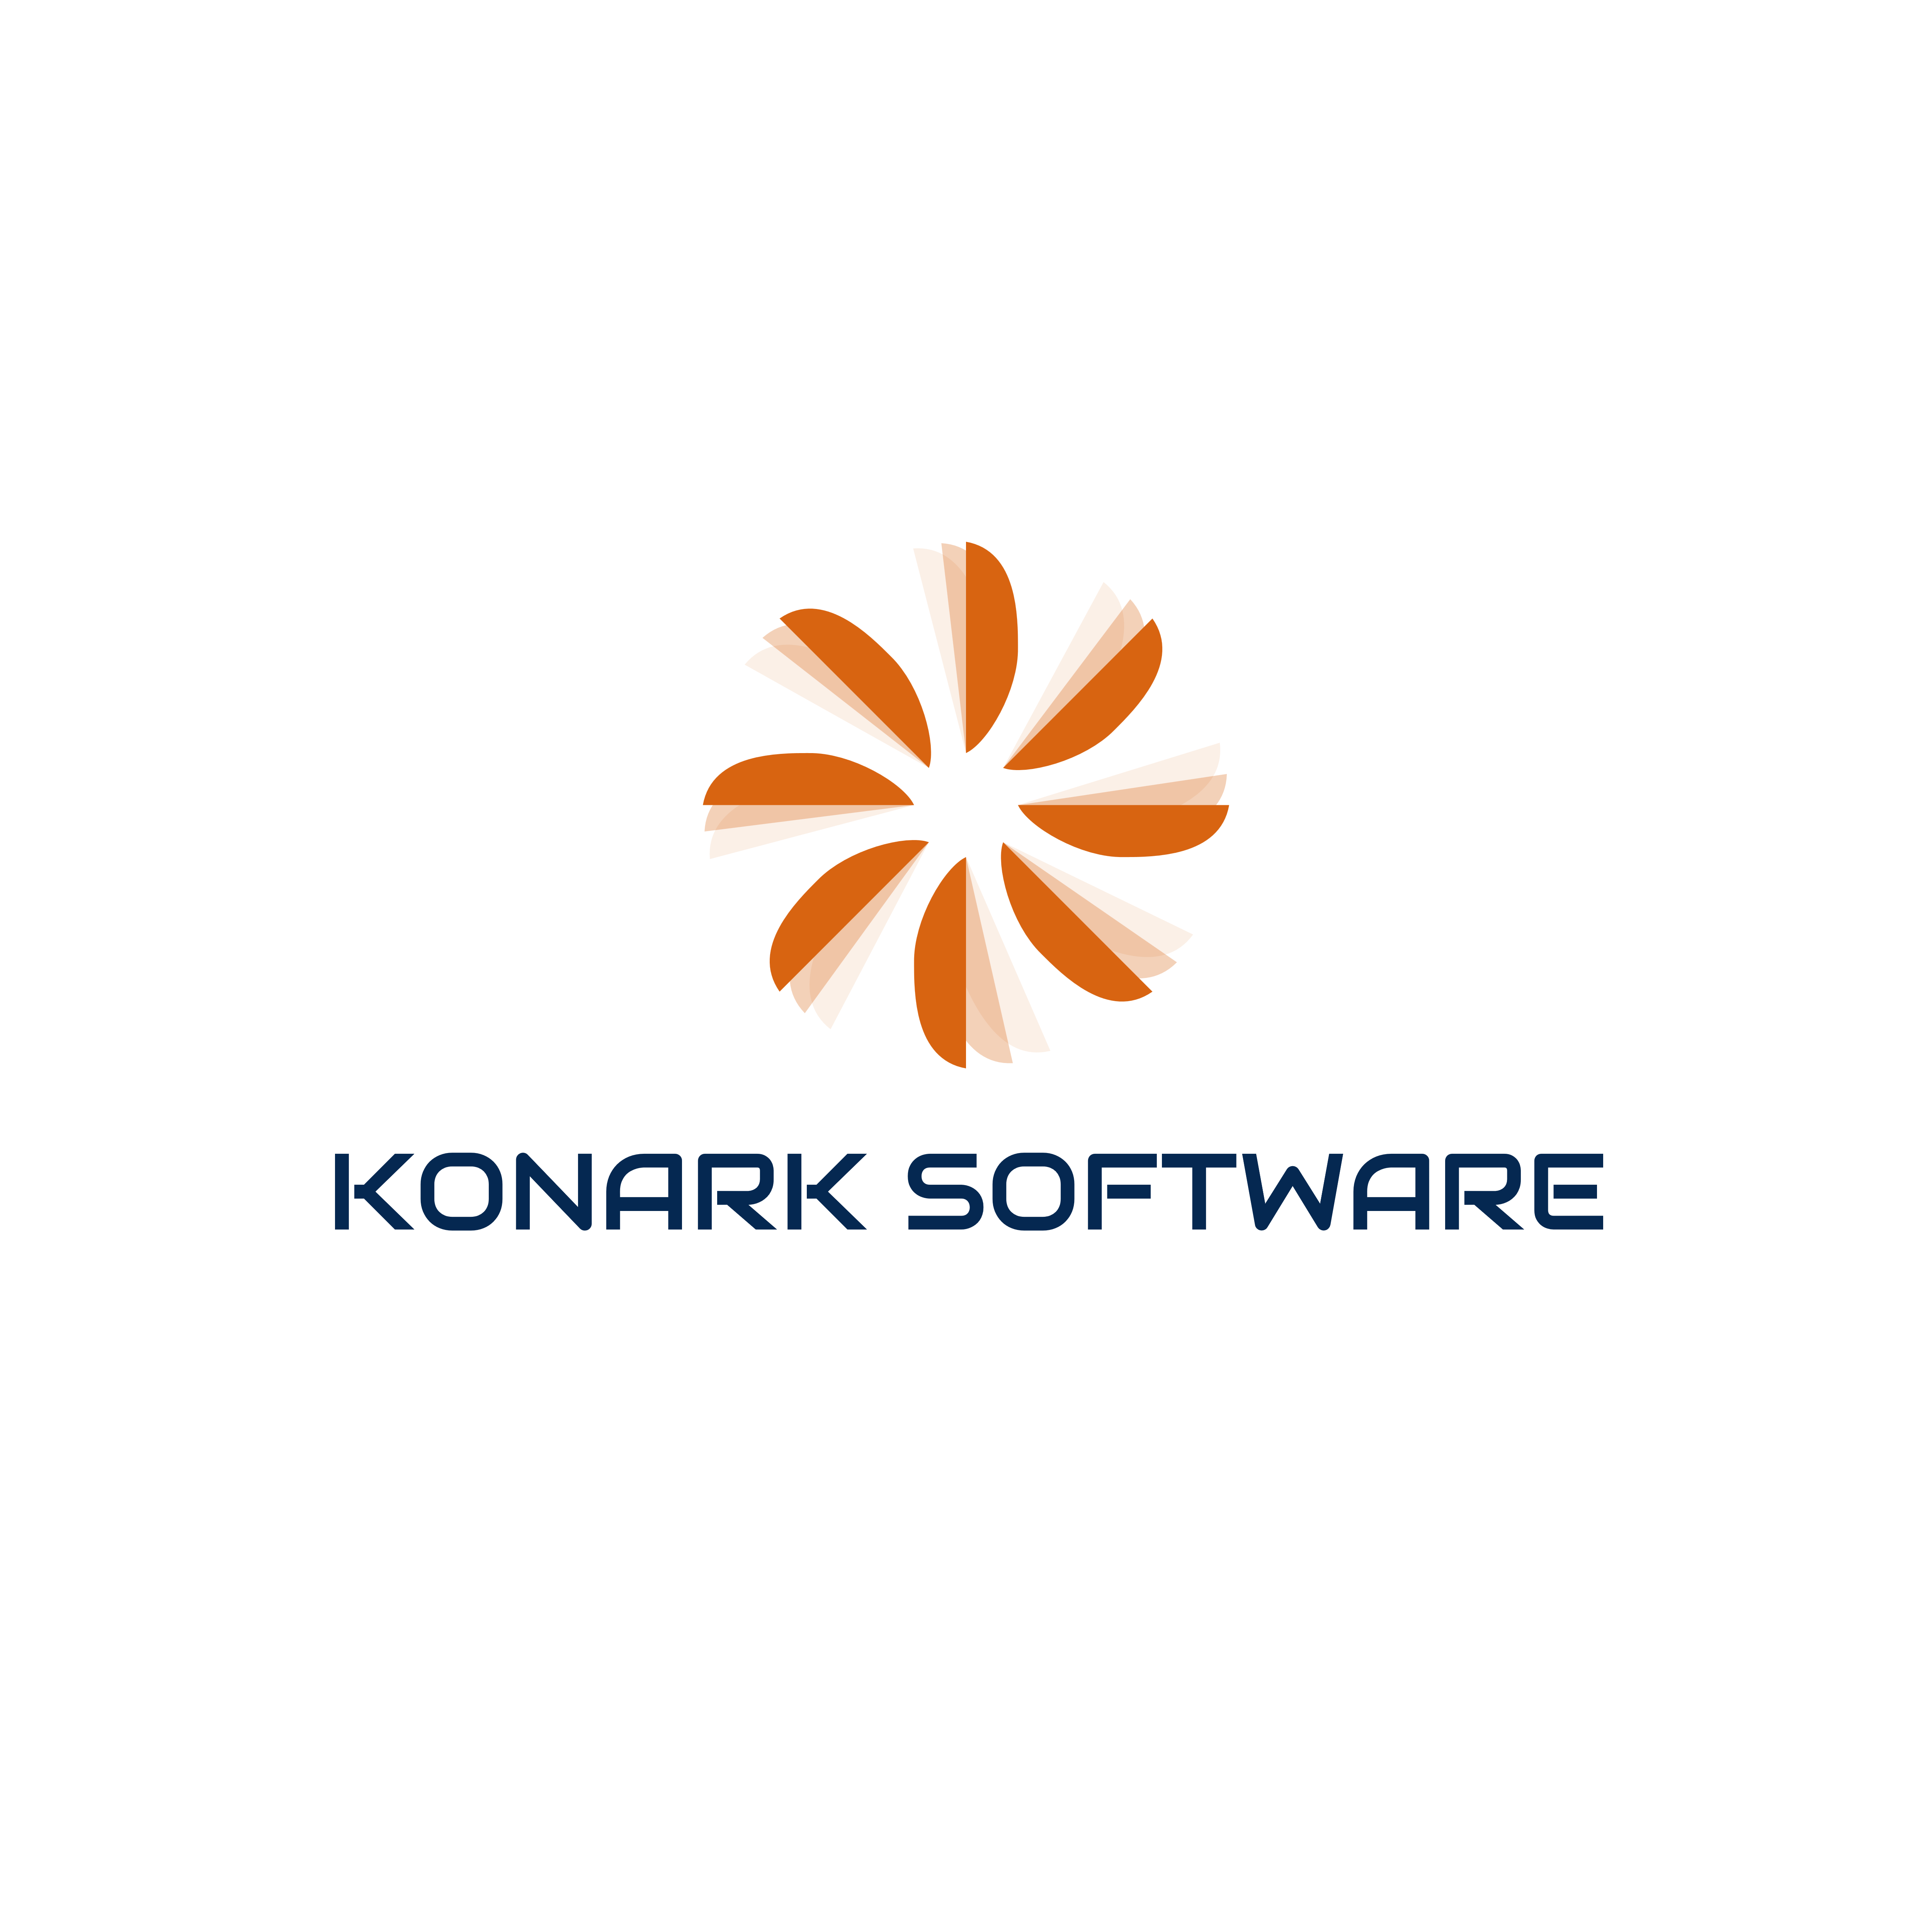 Konark Software